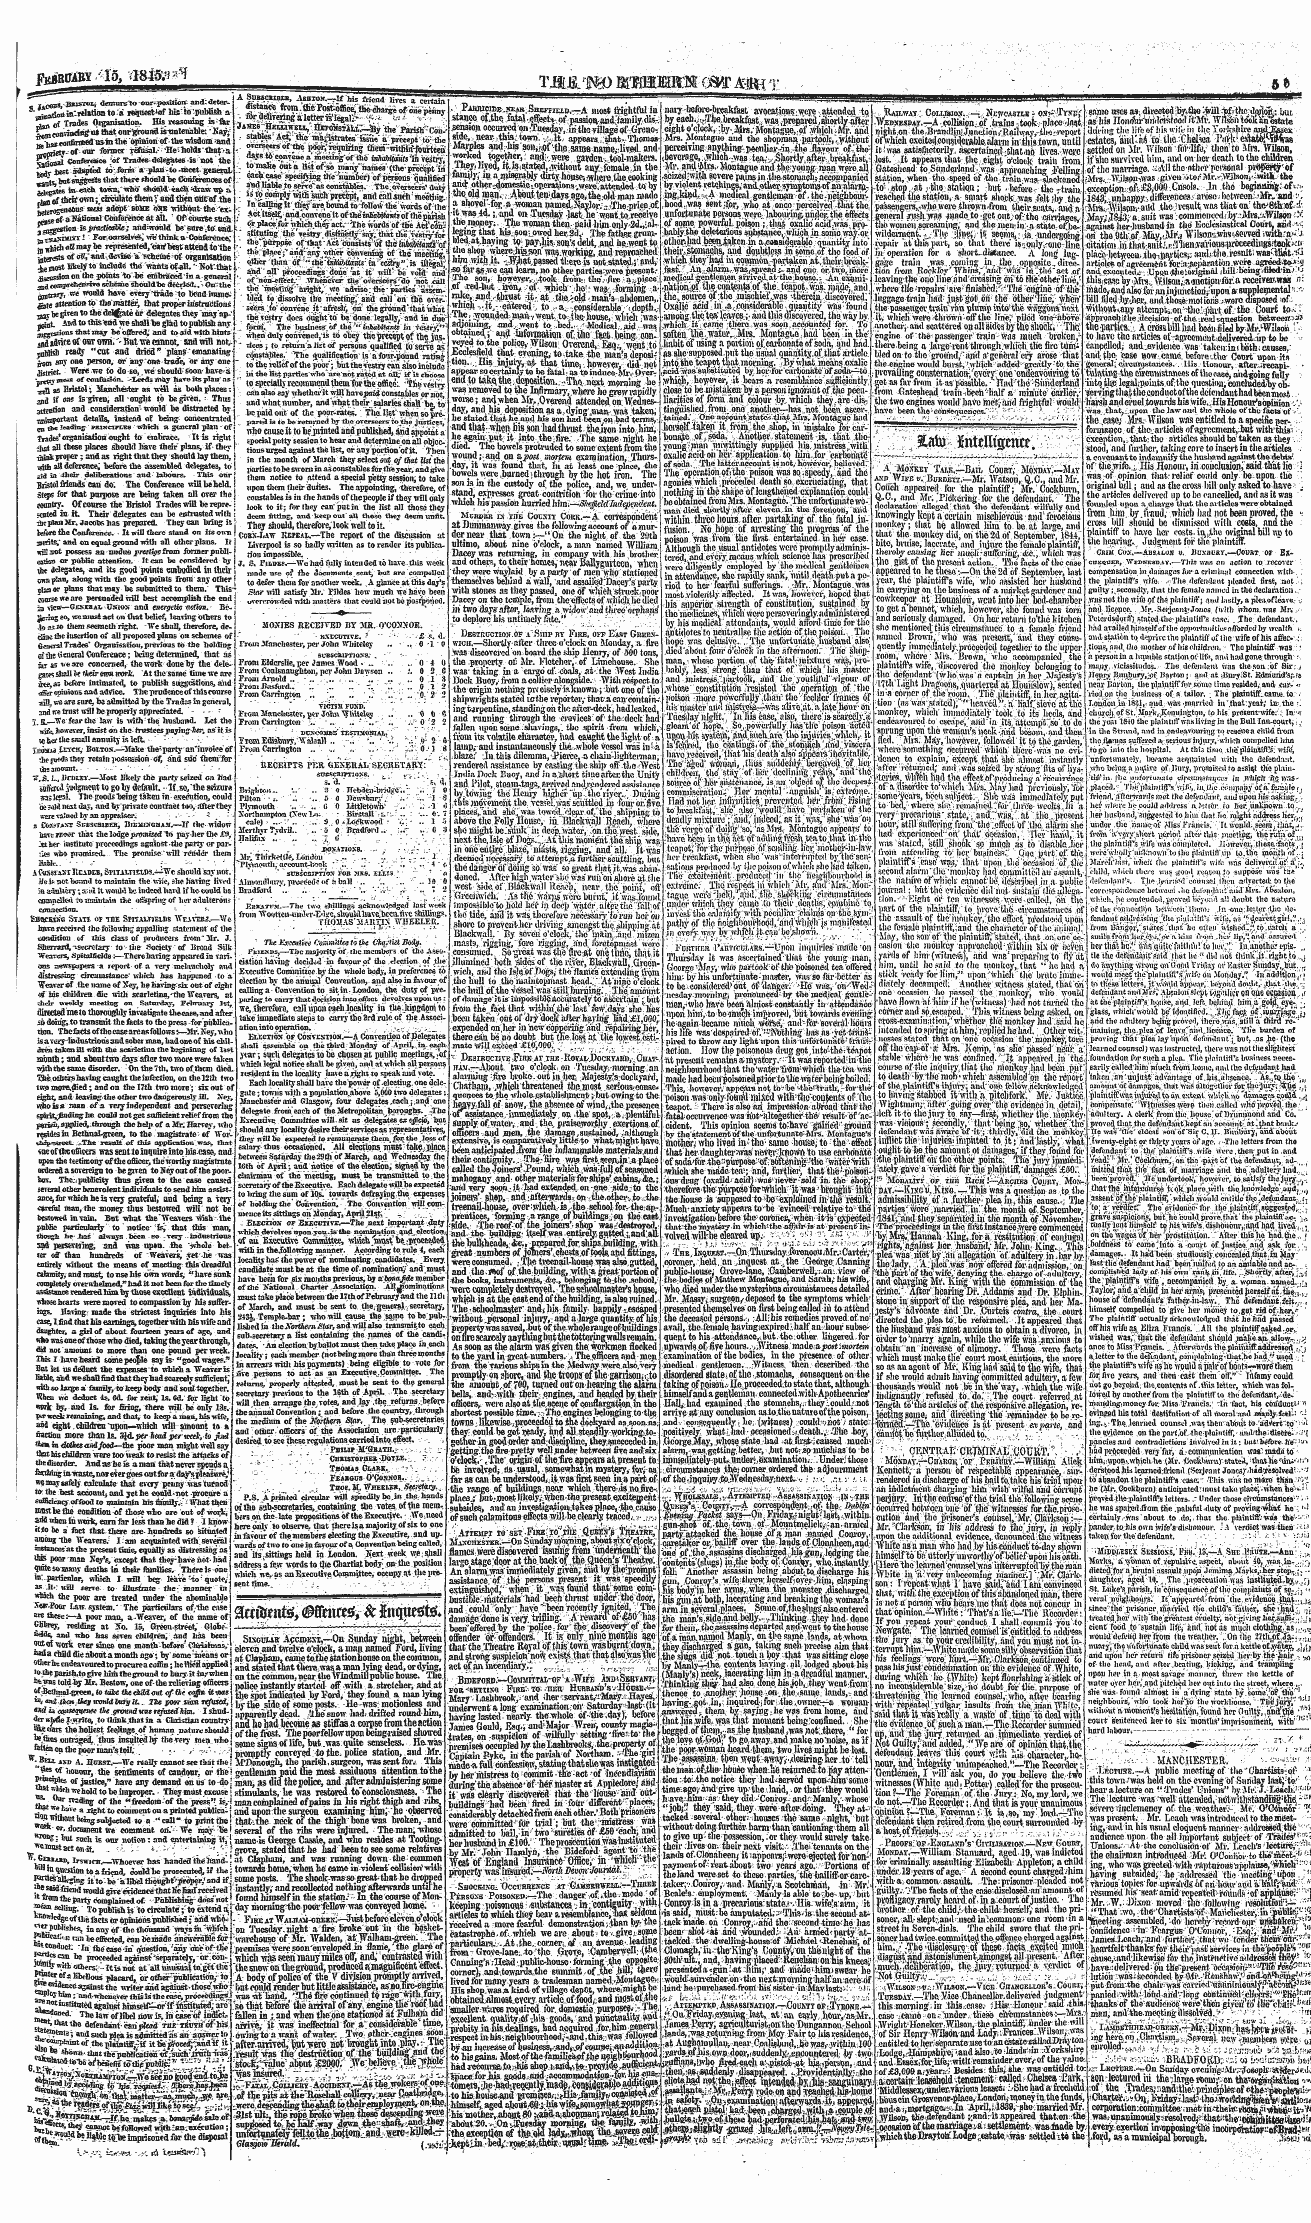 Northern Star (1837-1852): jS F Y, 4th edition: 5